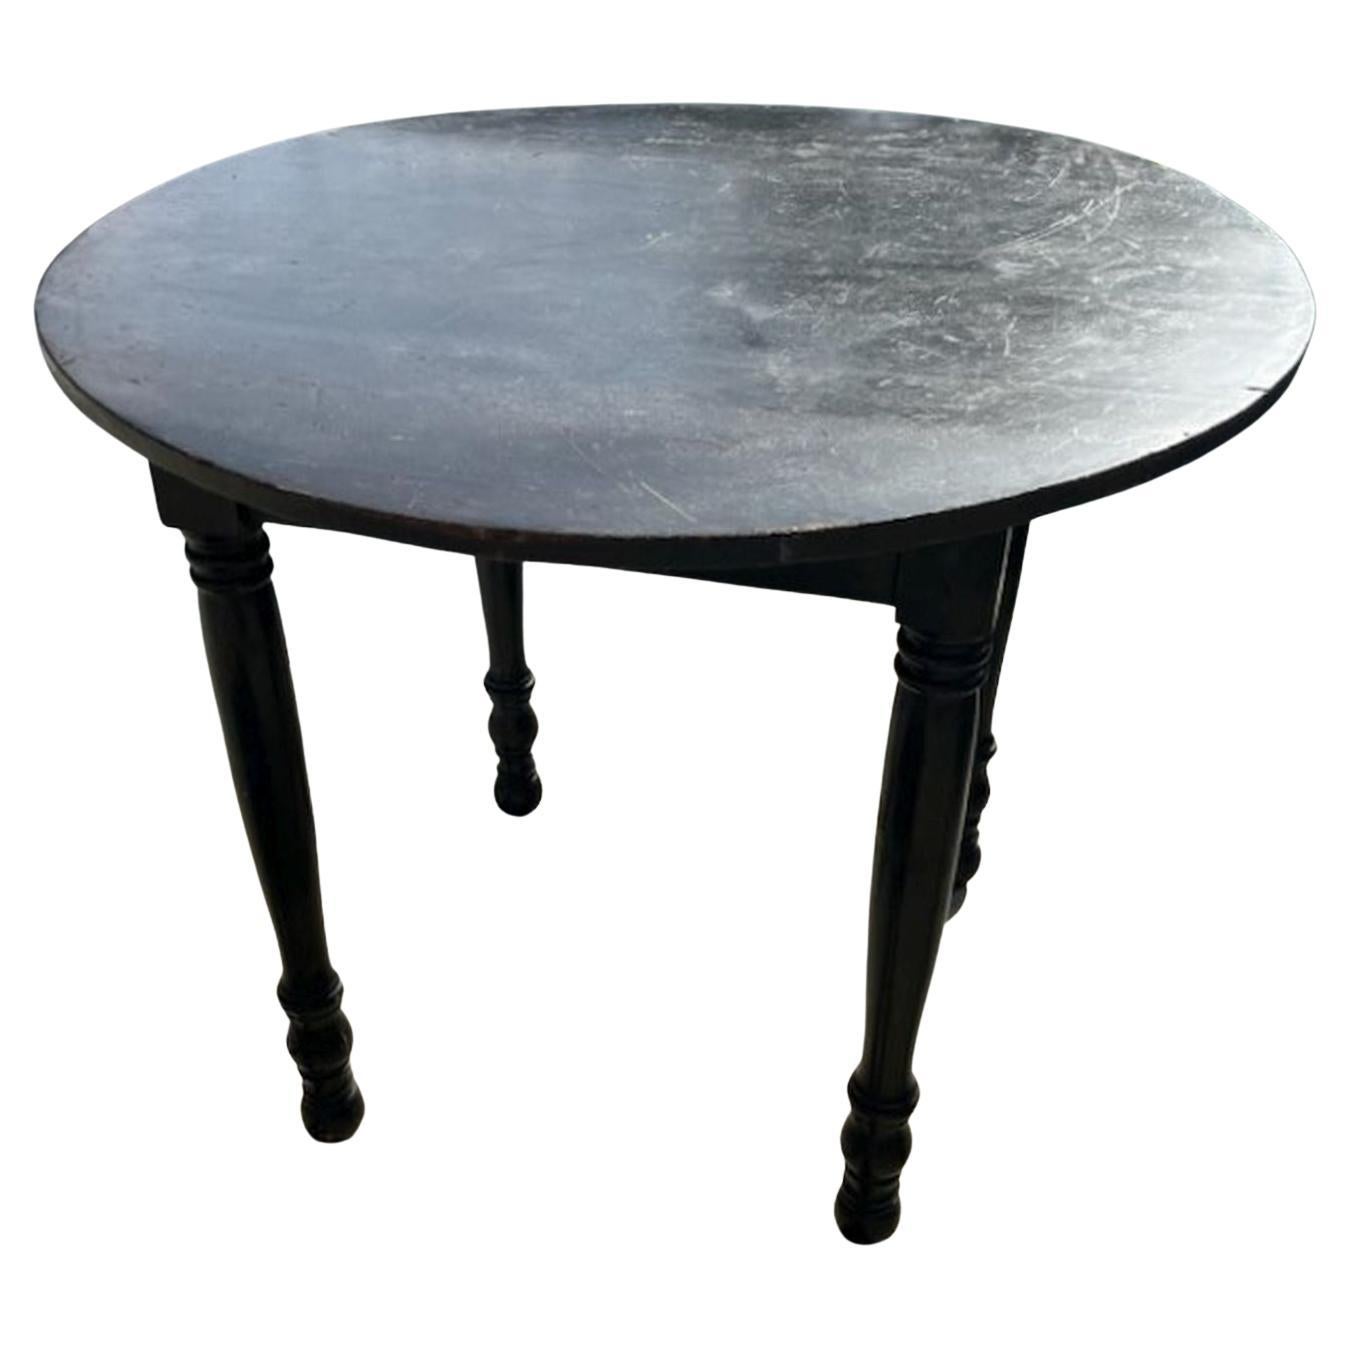 19thc Black Painted Round Tavern Table